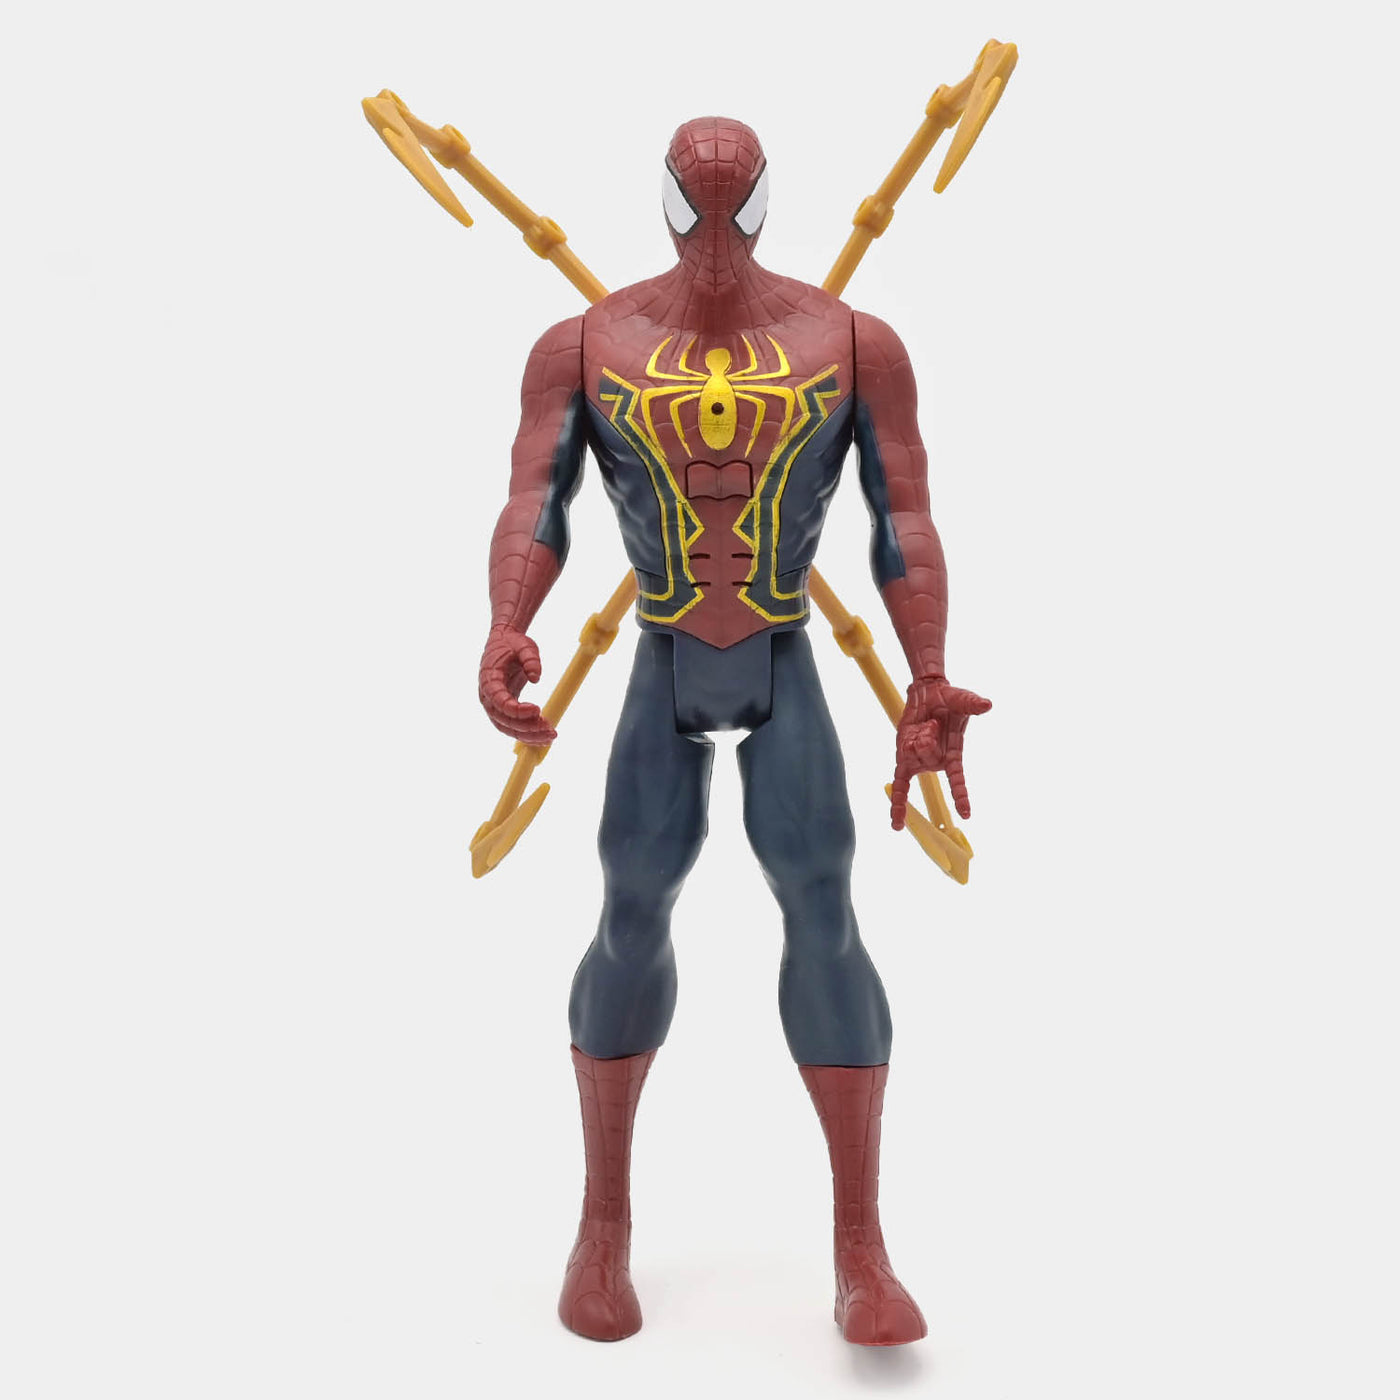 Super Action Hero Figure Toy